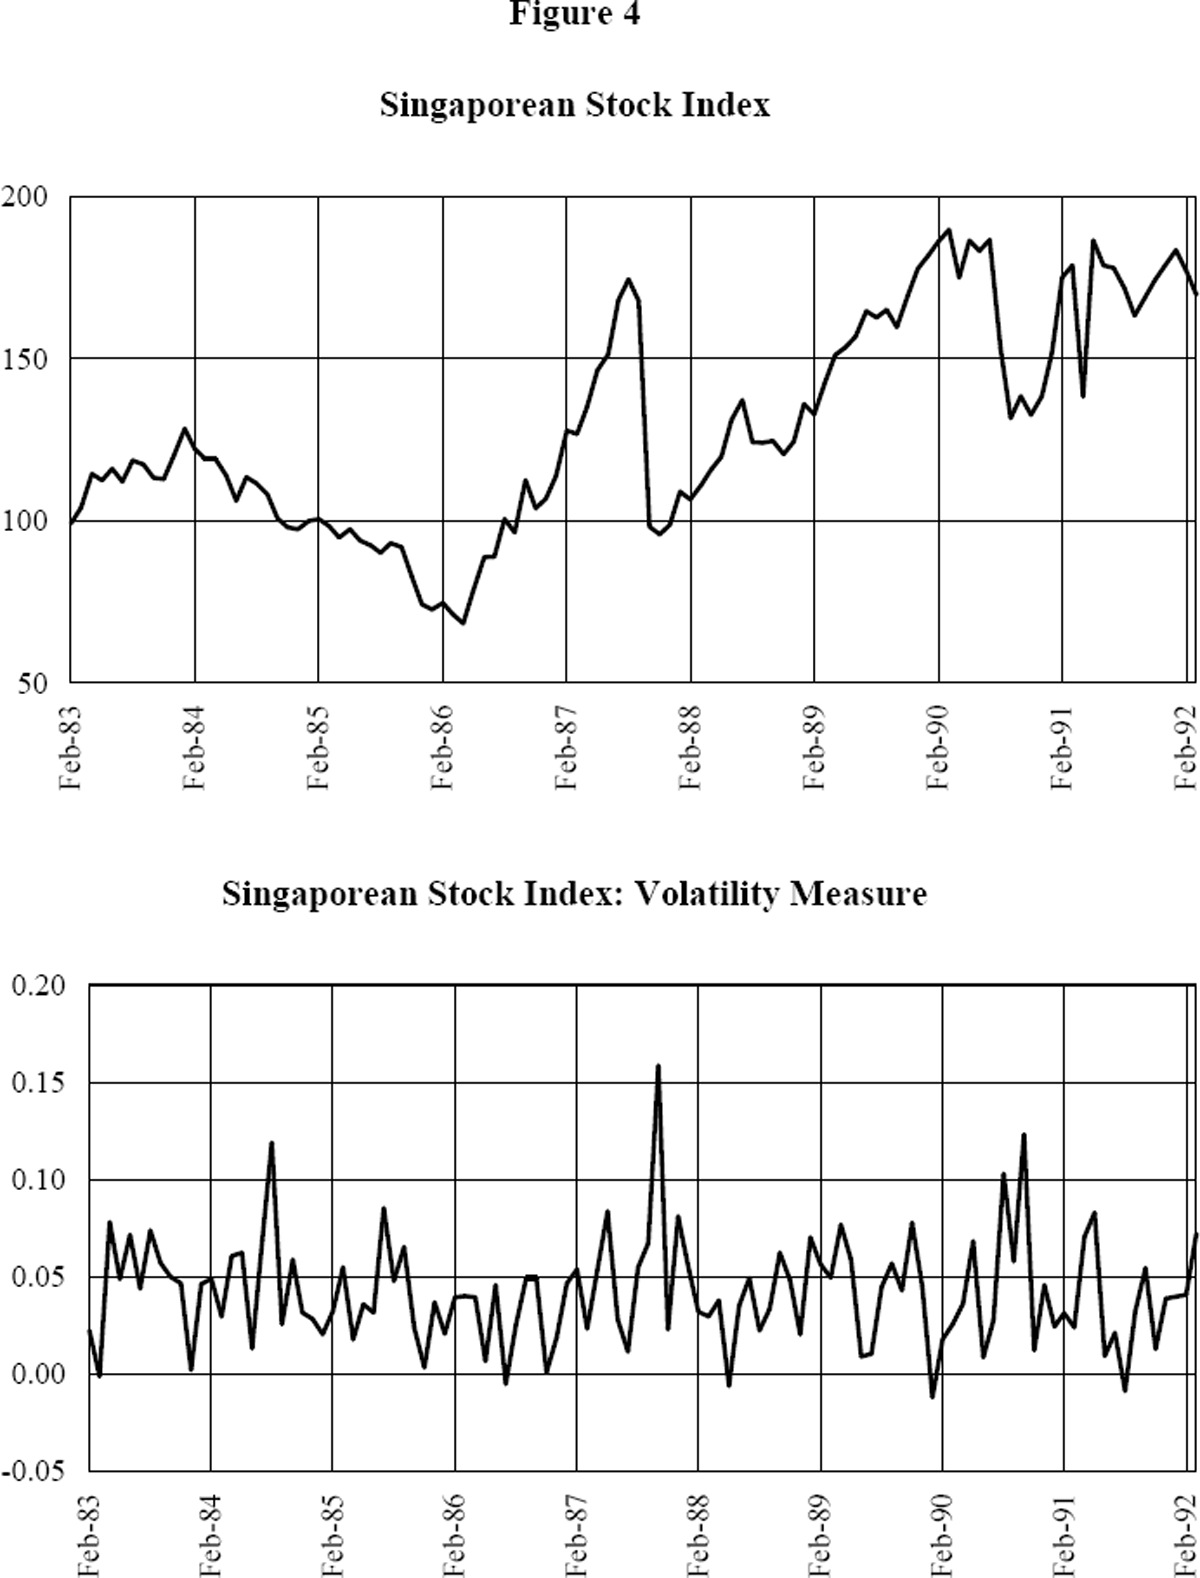 Figure 4: Singaporean Stock Index and Volatility Measure